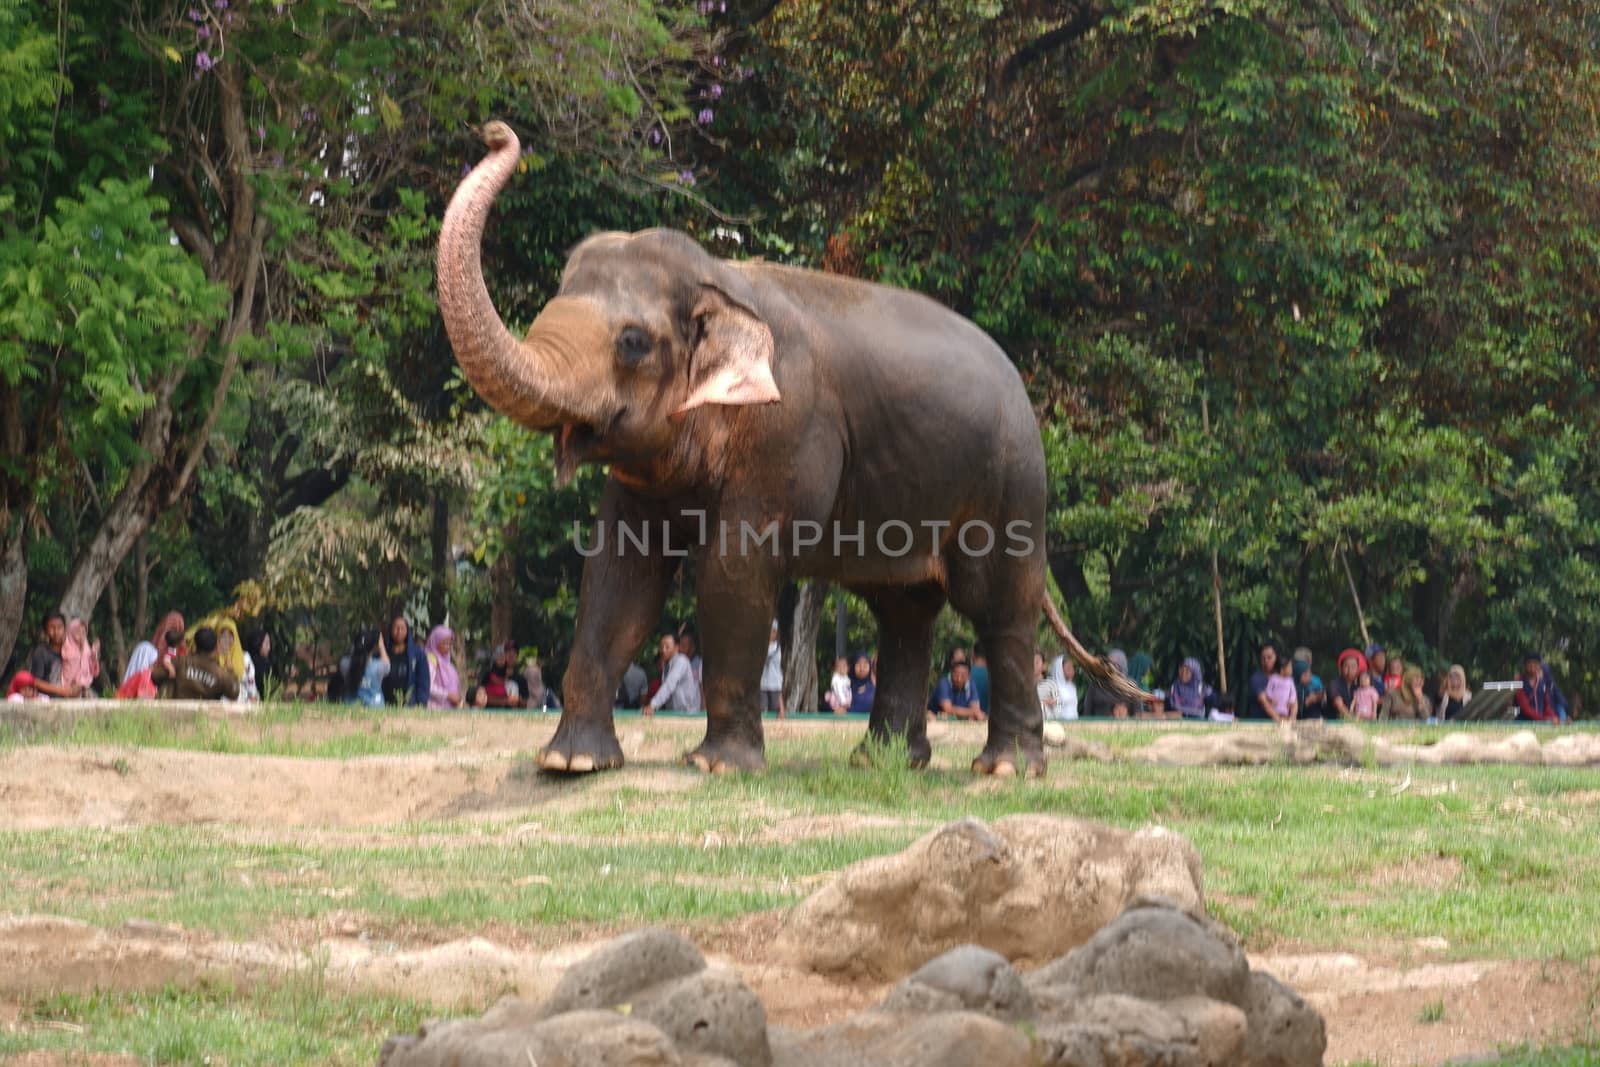 an elephant in the zoo by pengejarsenja